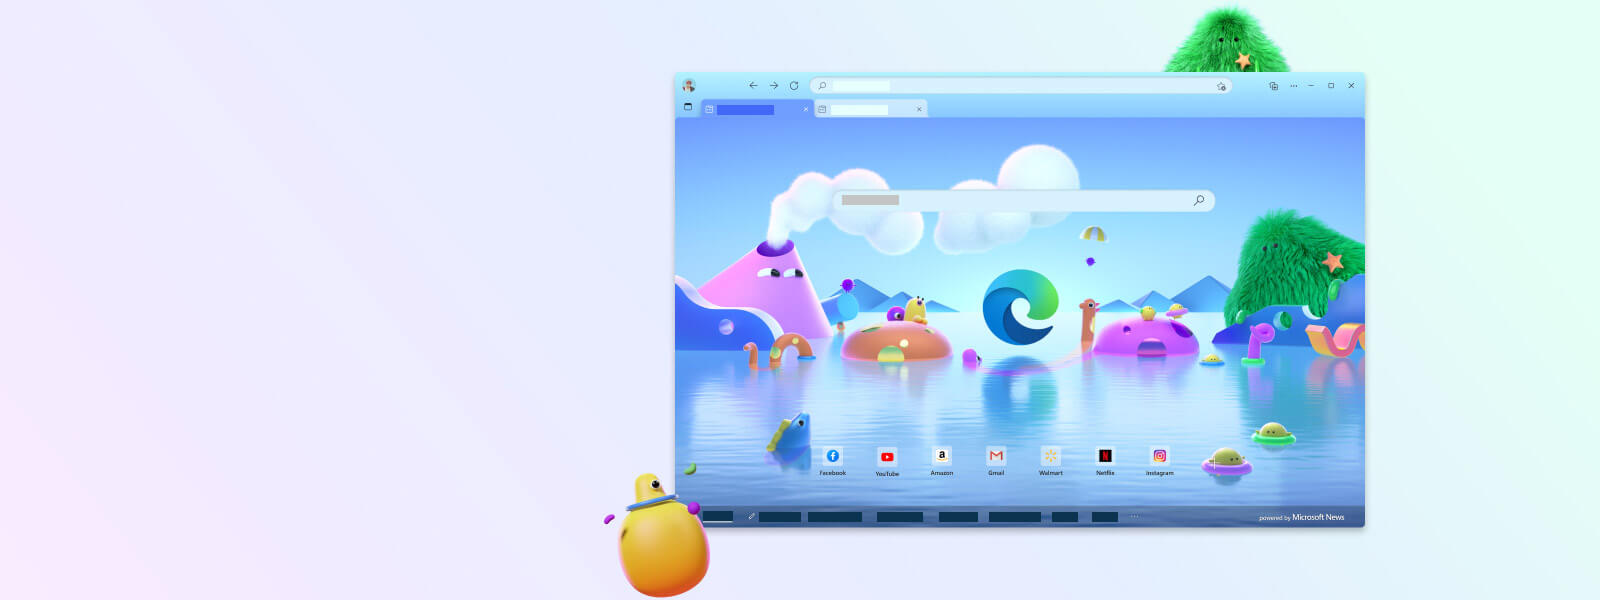 Microsoft Edge 浏览器屏幕显示儿童模式的各种卡通形象